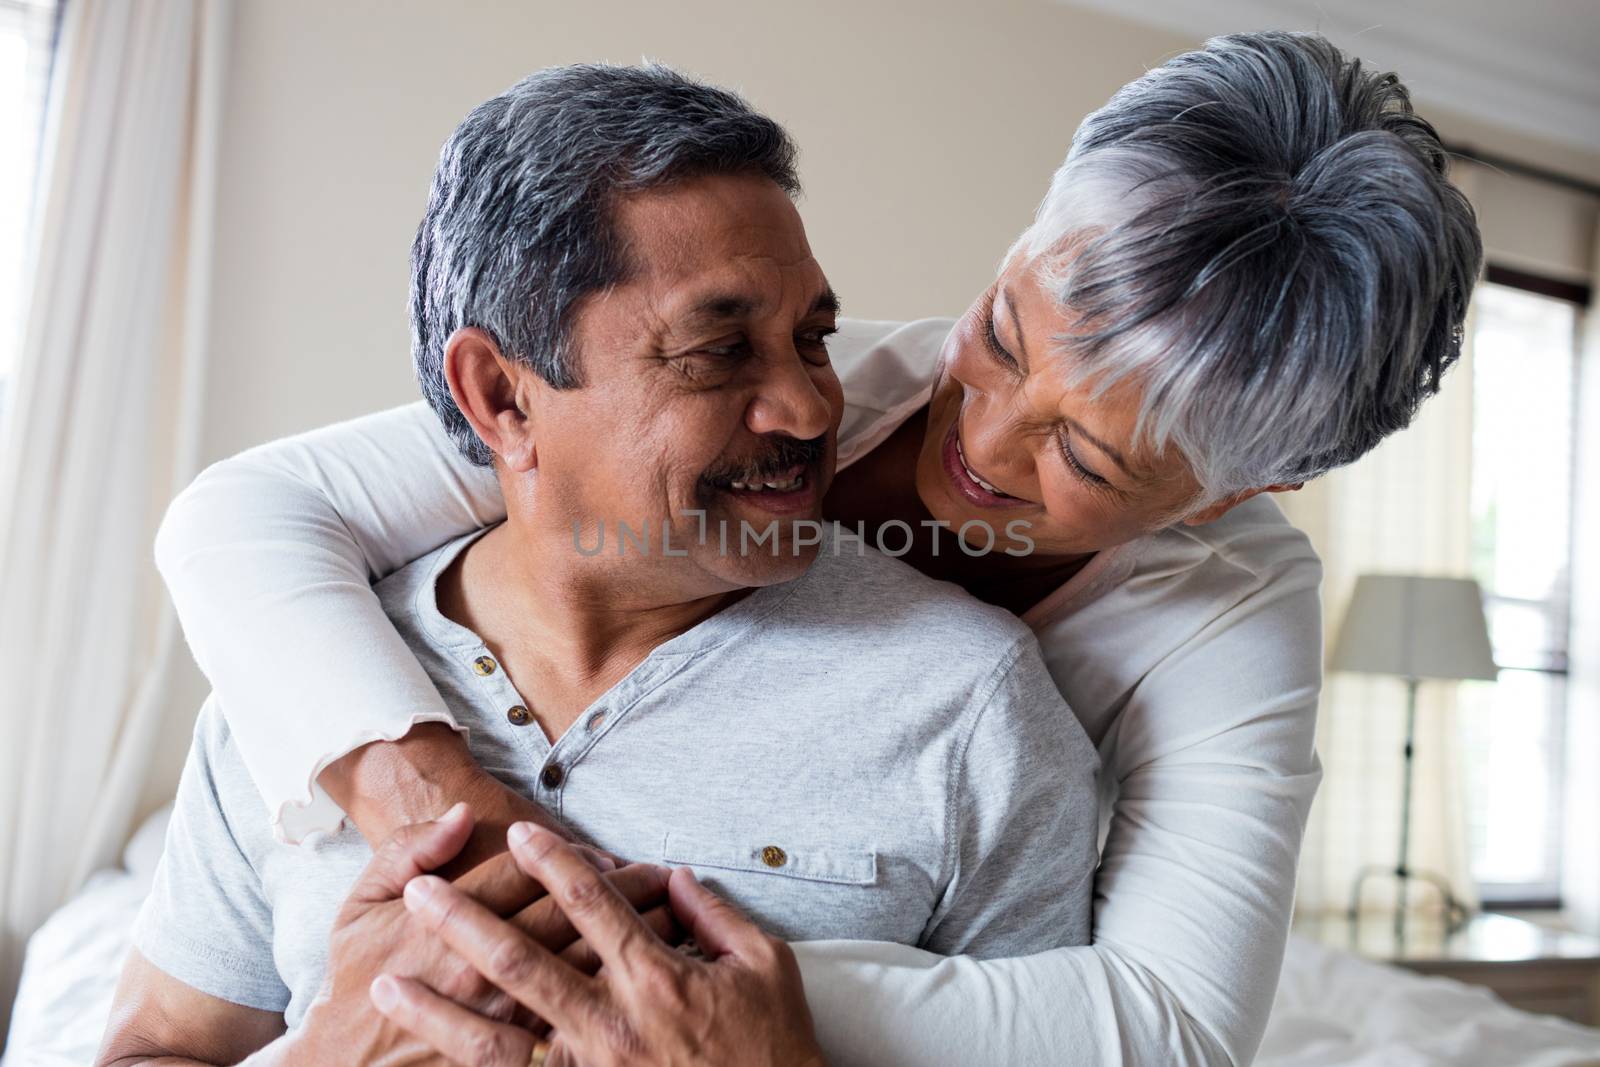 Romantic couple embracing in bedroom by Wavebreakmedia